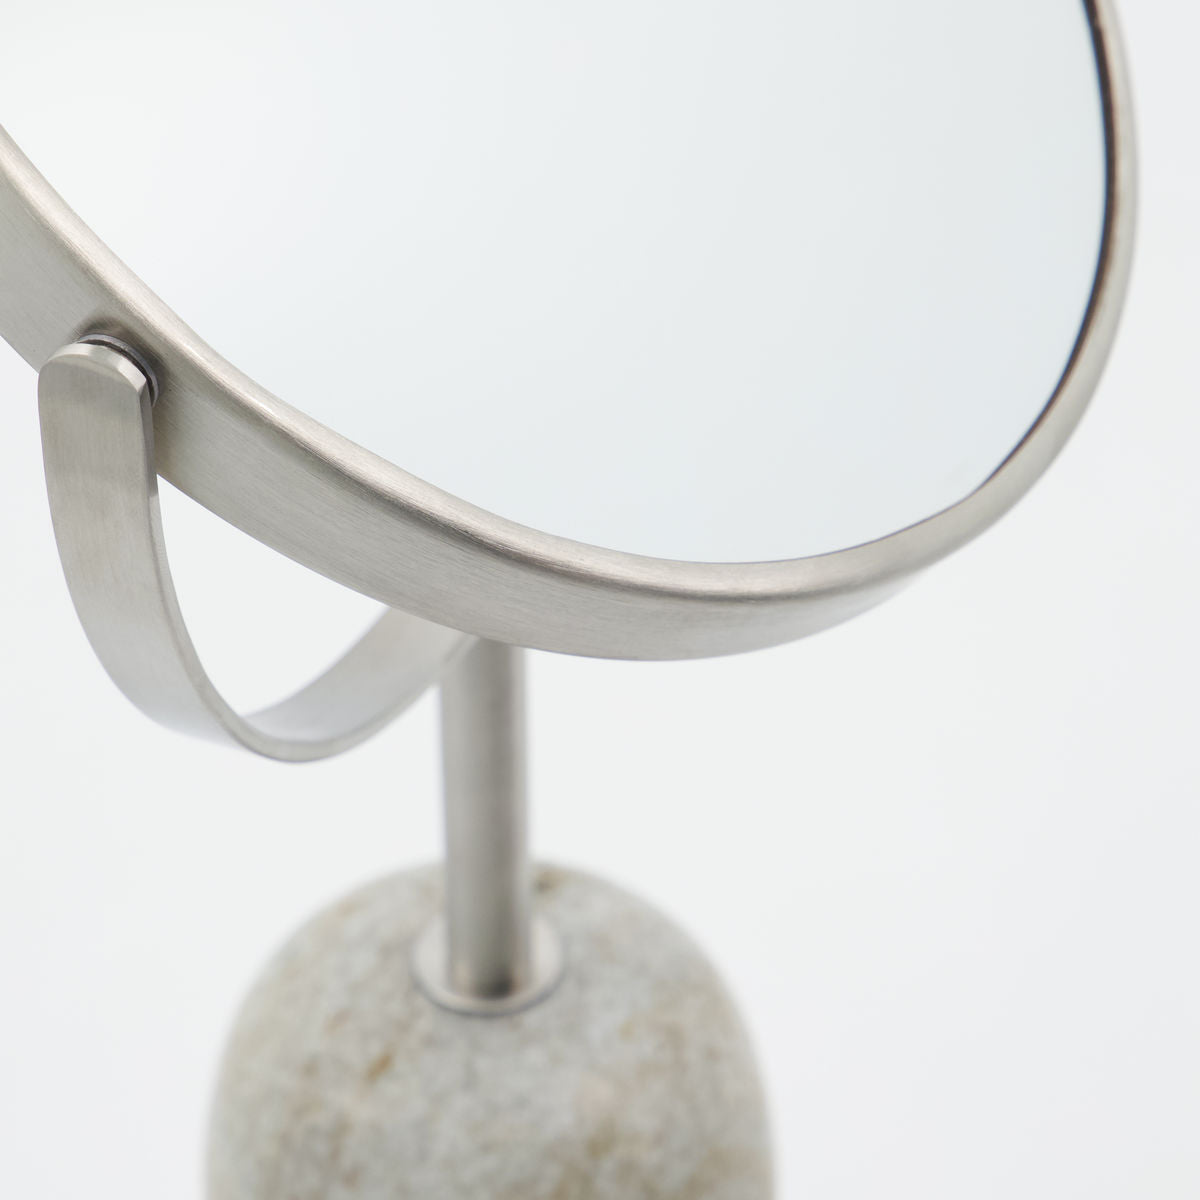 Meraki Two-sided mirror, MKMarble, Beige